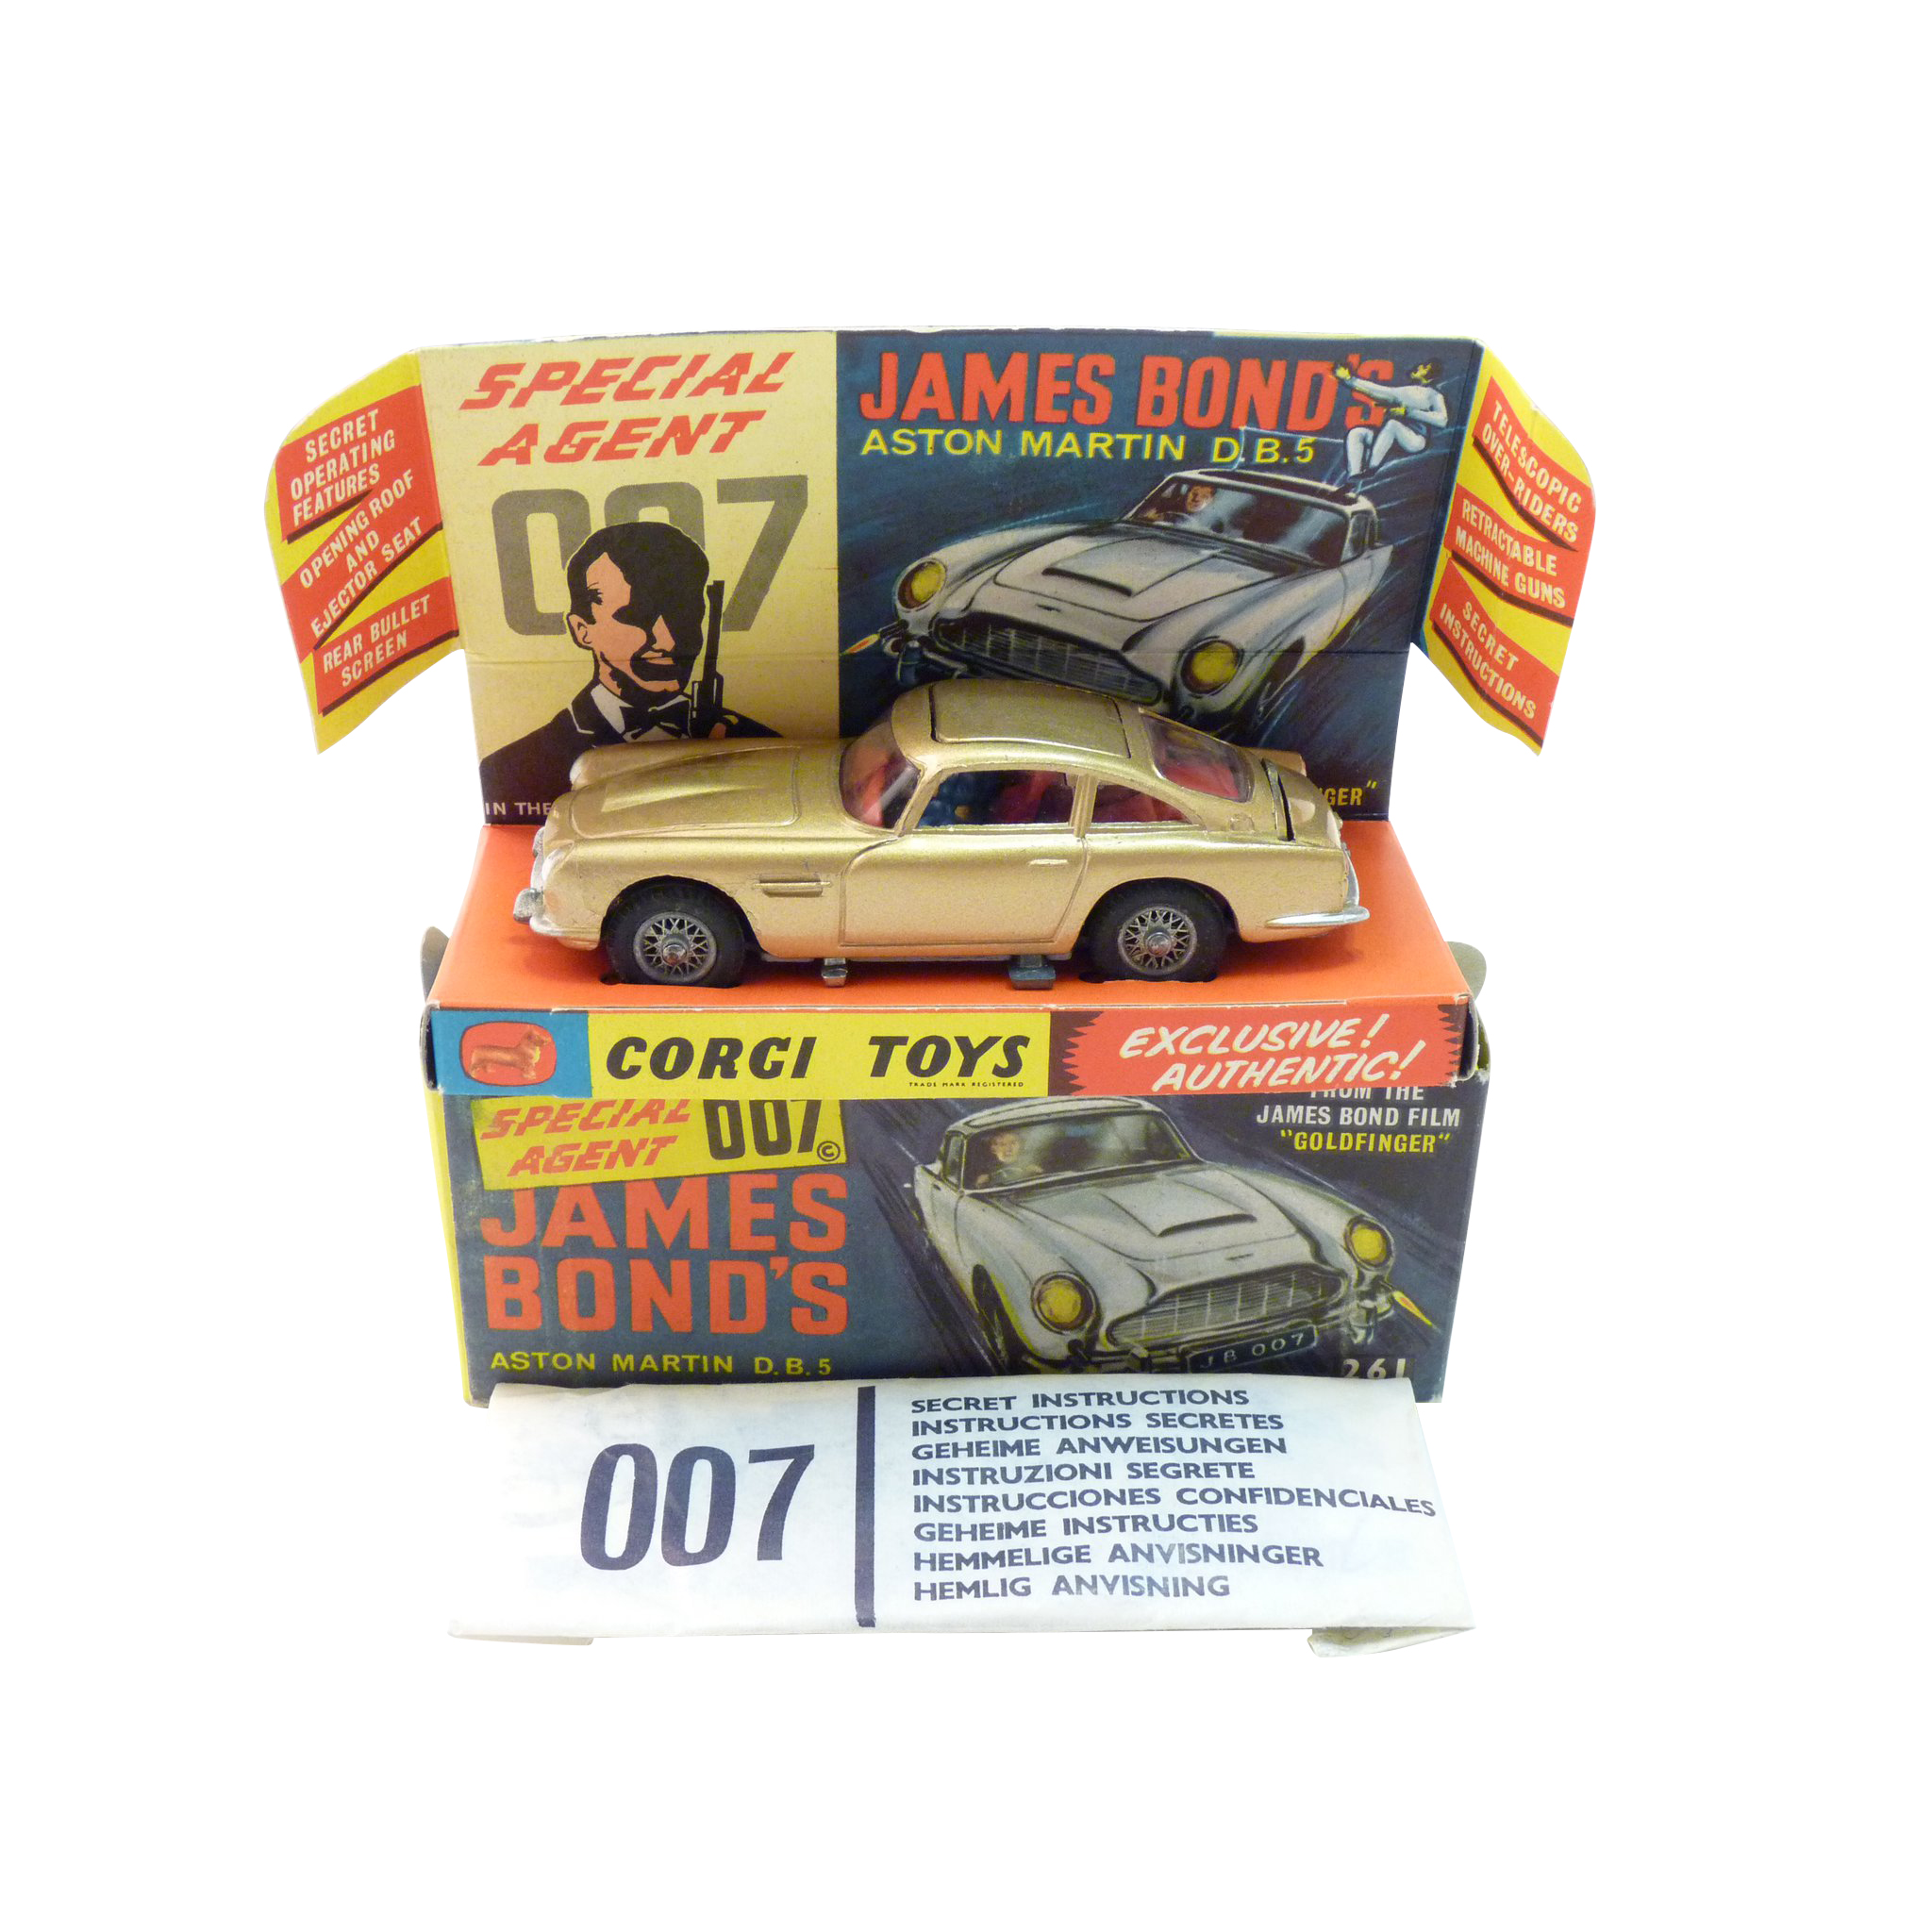 Corgi Toys 261 James Bond DB5 Car